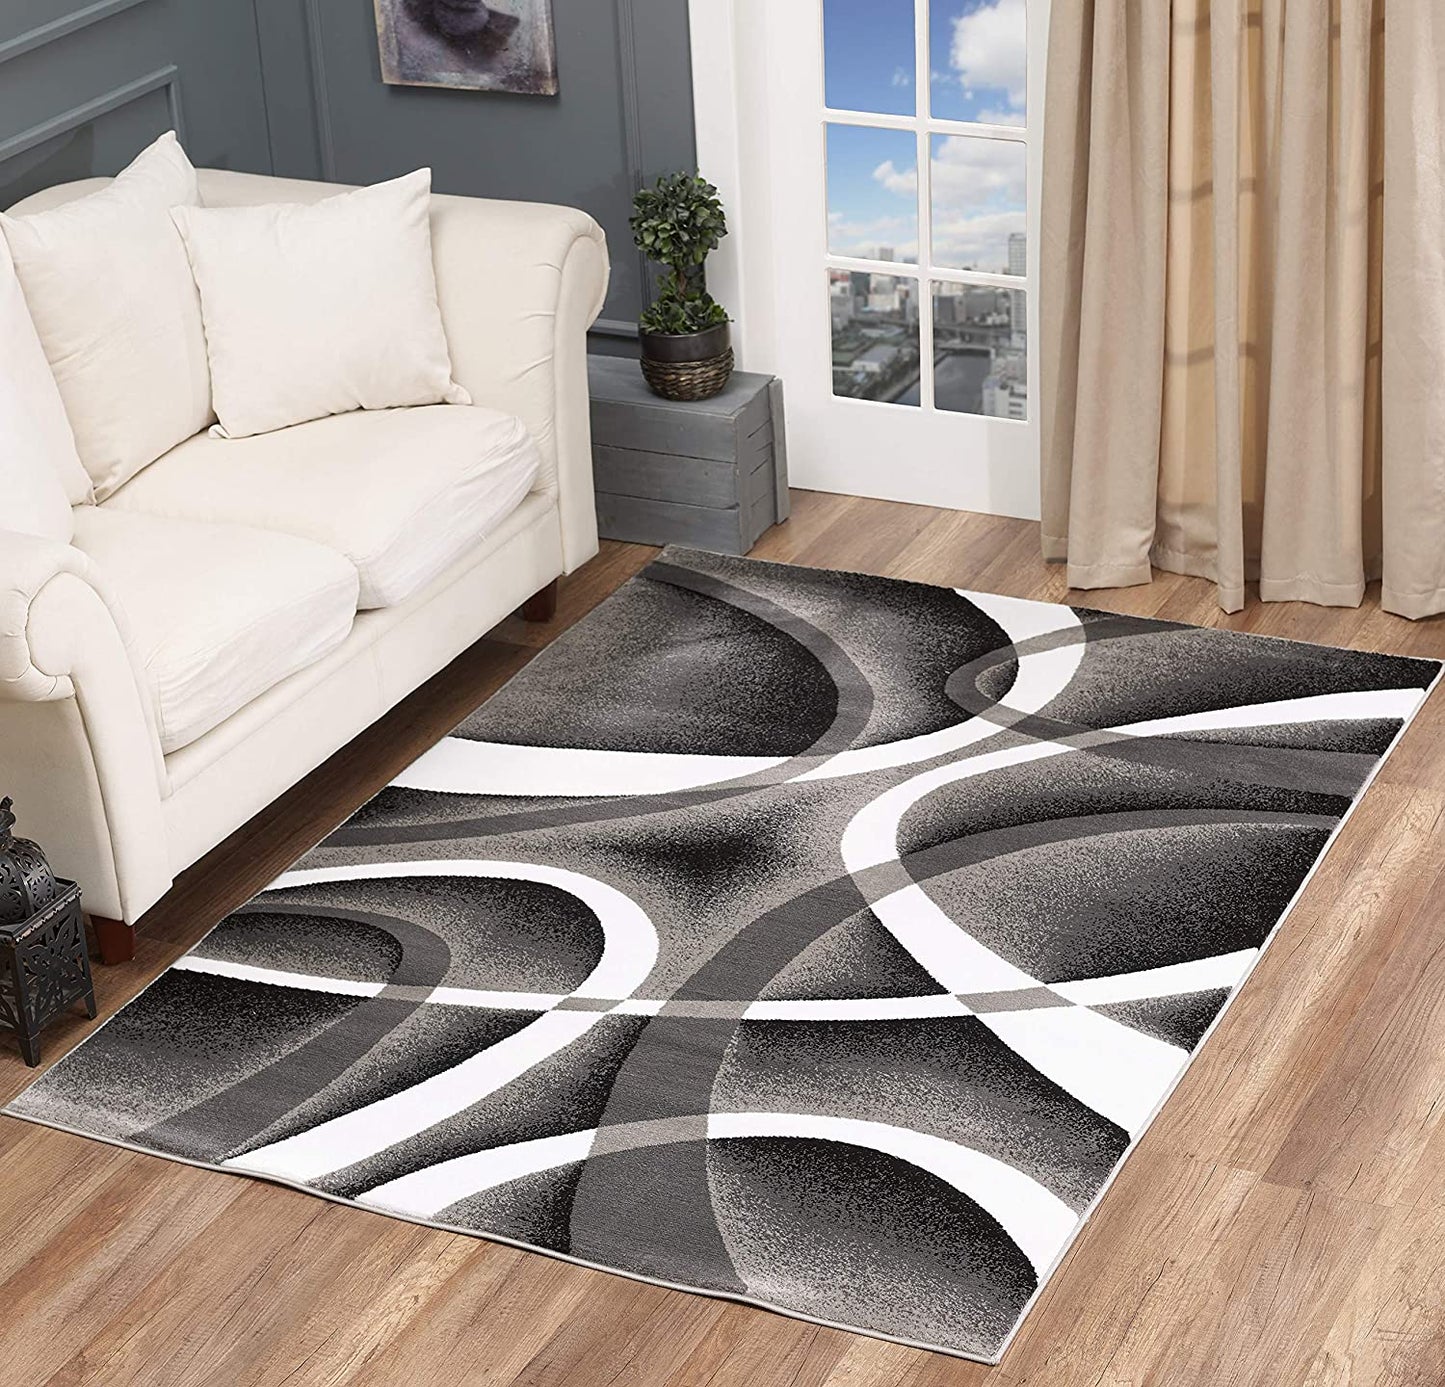 Gloryrugs Modern Area Rug 4X6 Grey Swirls Carpet